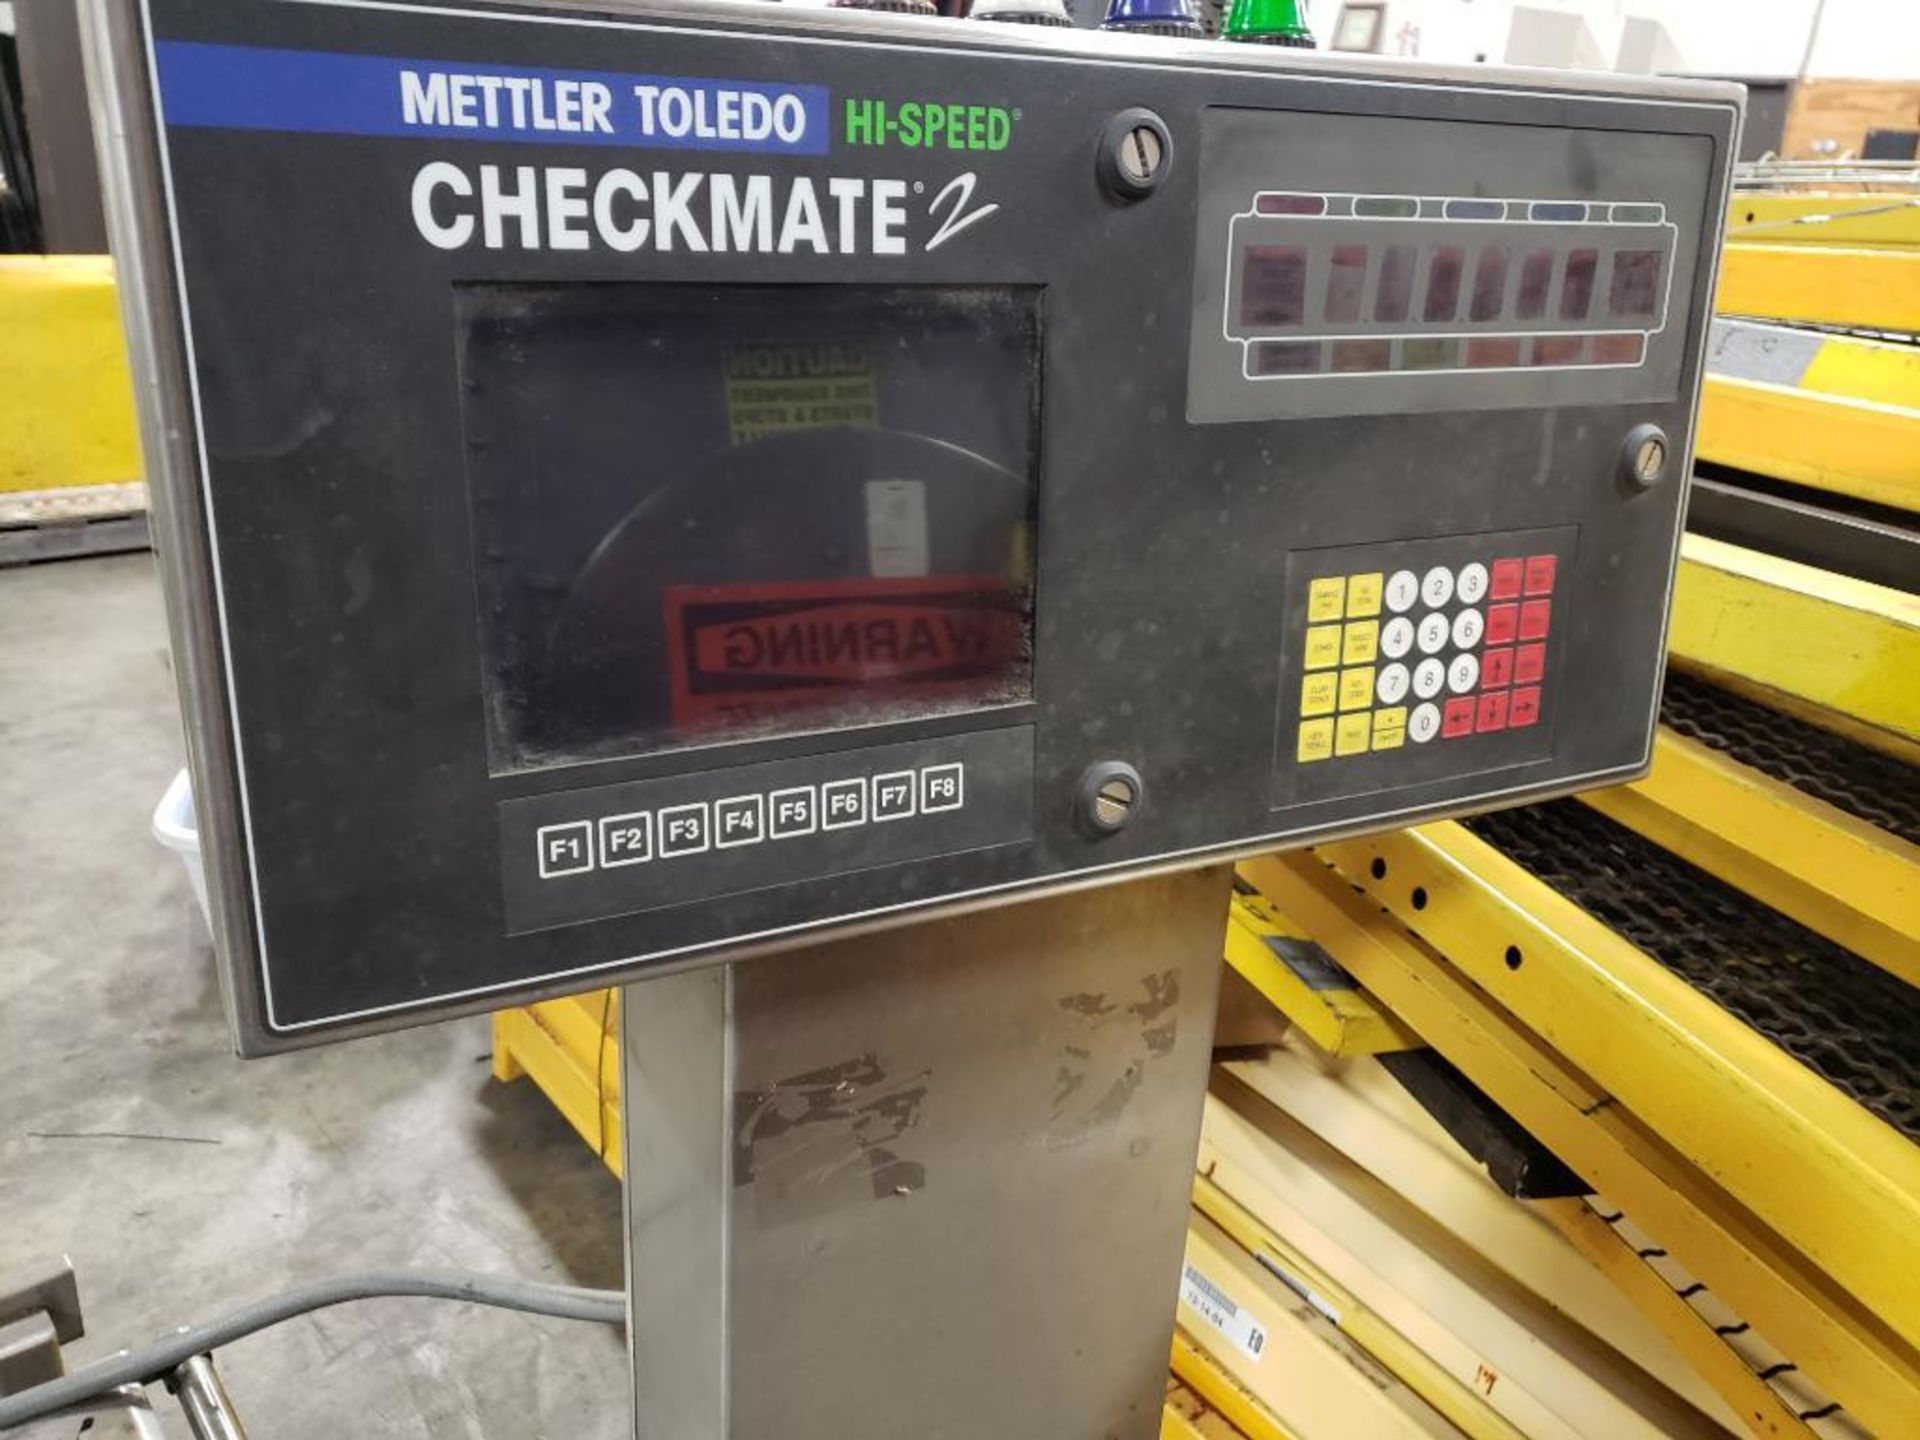 Mettler Toledo Hi-Speed Checkmate 2 high speed weighing machine. - Image 2 of 17